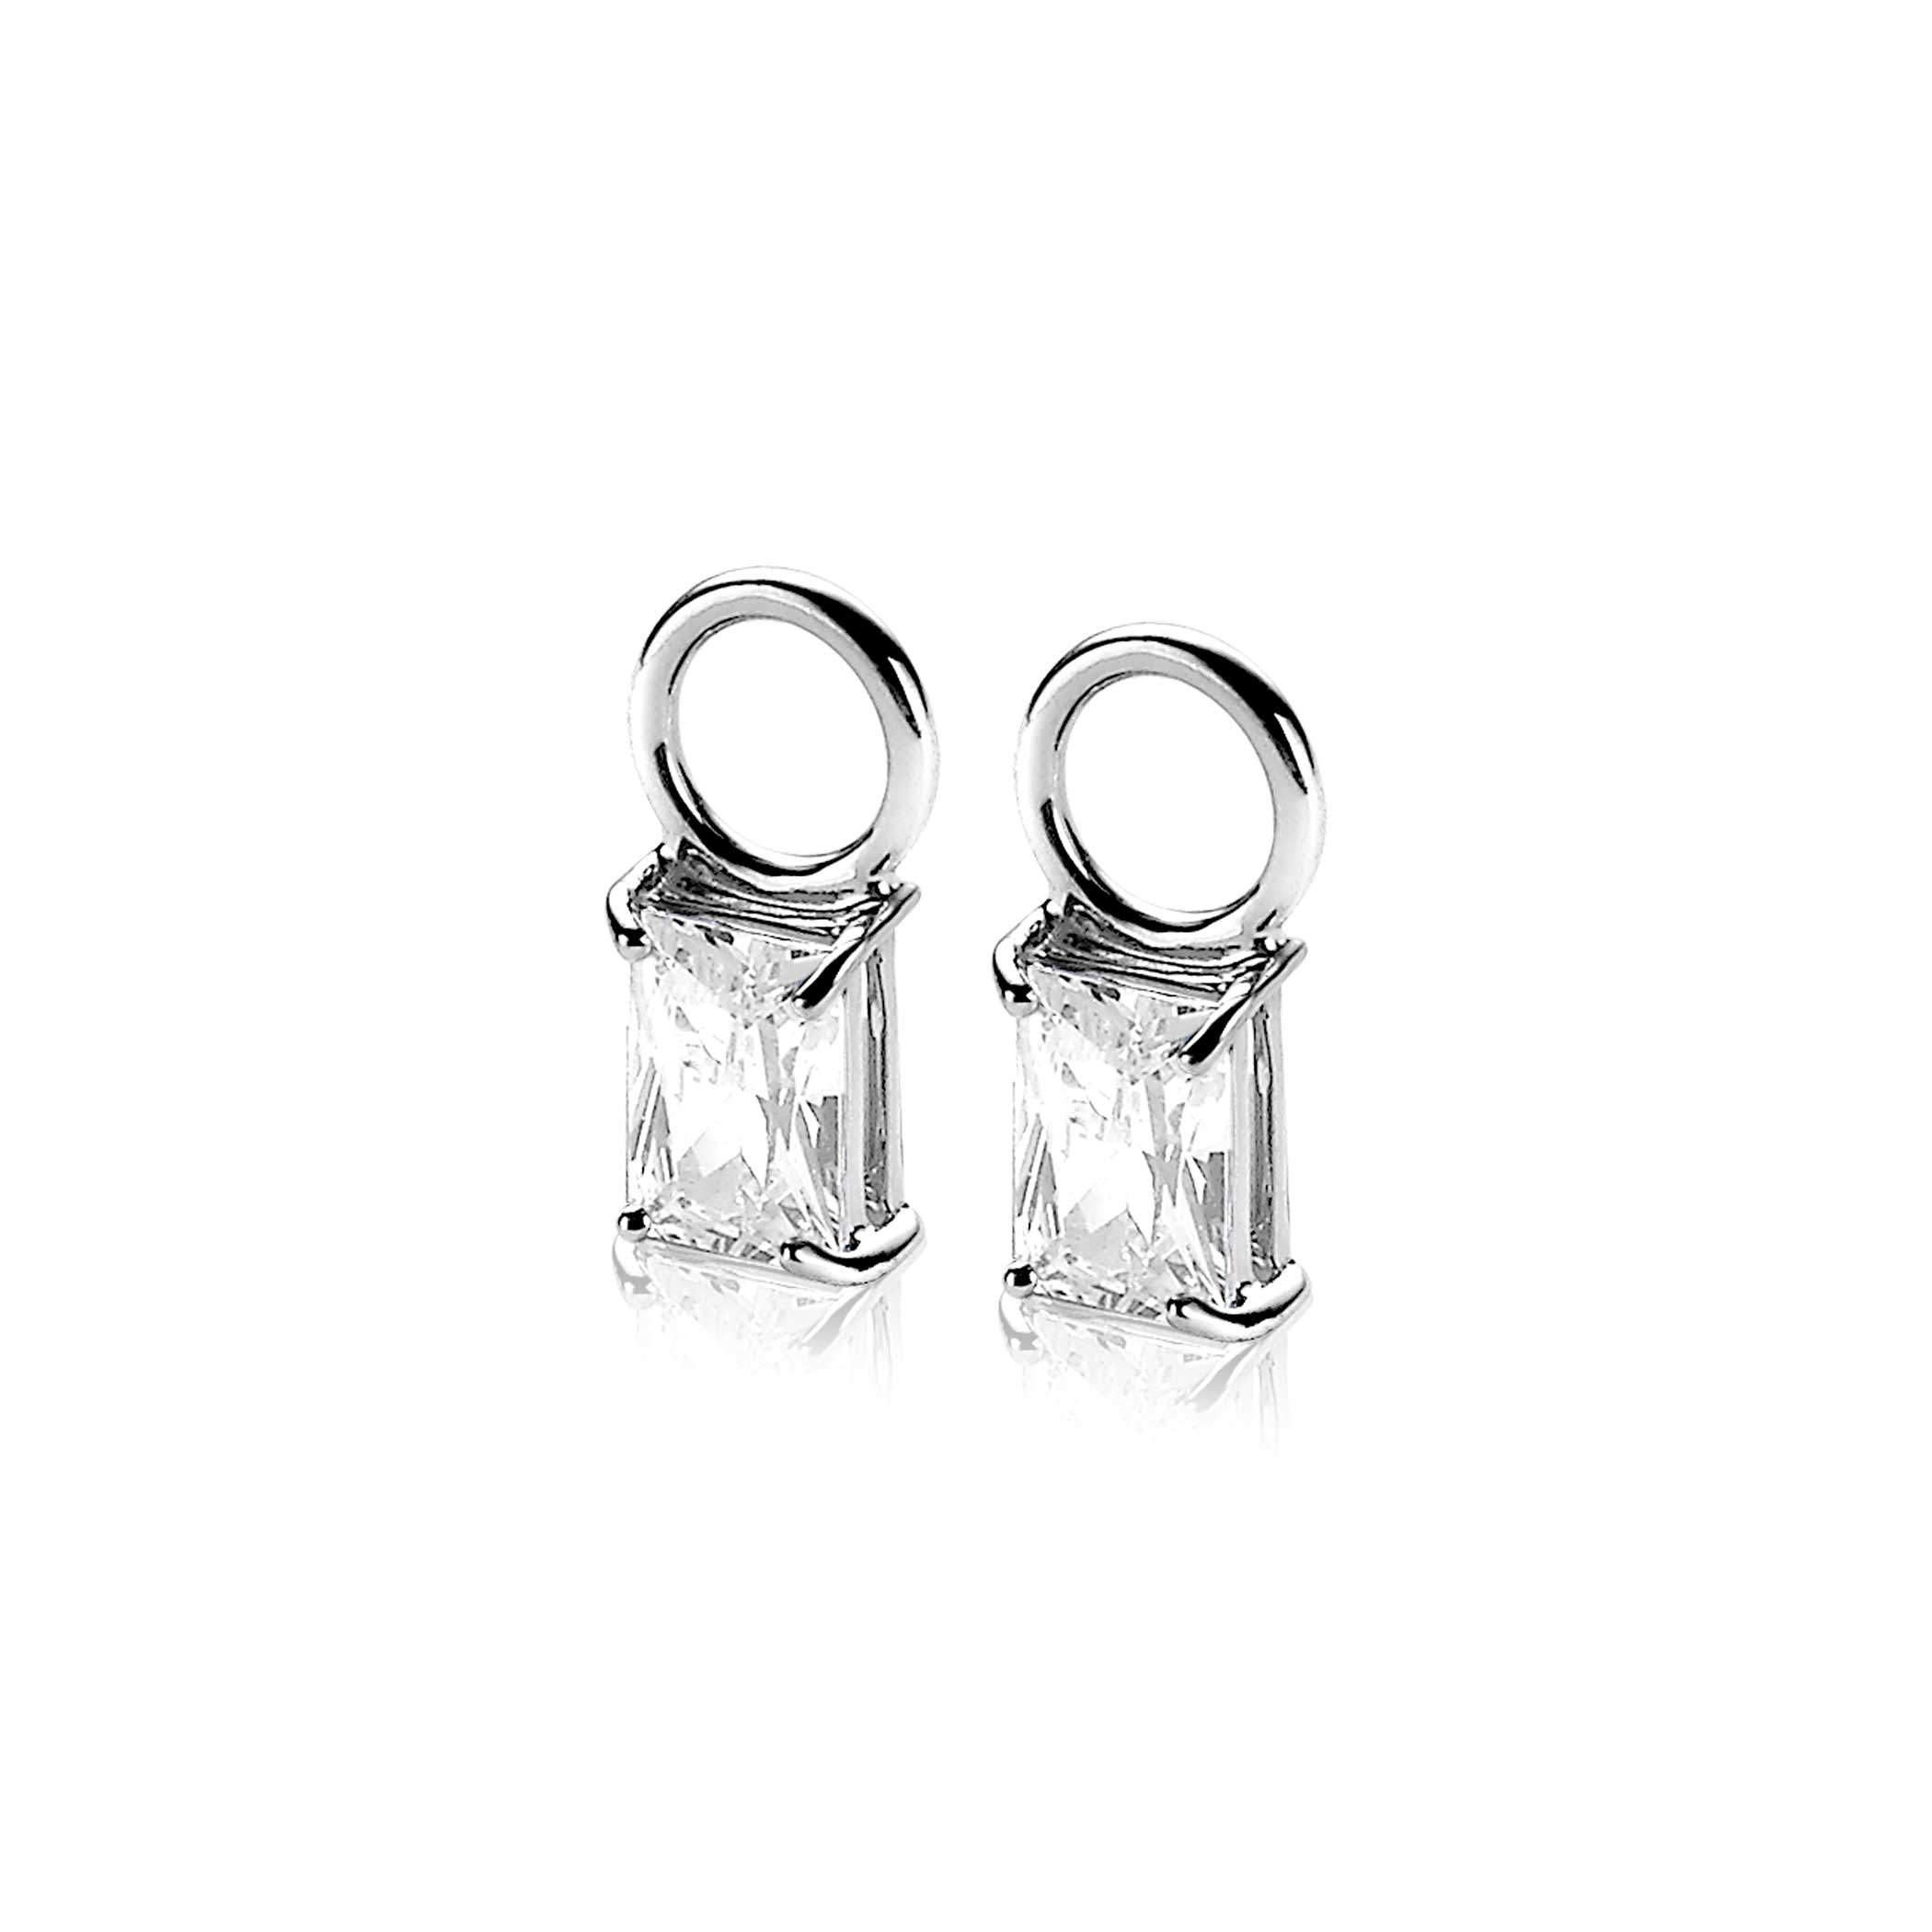 12mm ZINZI Sterling Silver Earrings Pendants Rectangle Zirconia ZICH2021 (excl. hoop earrings)